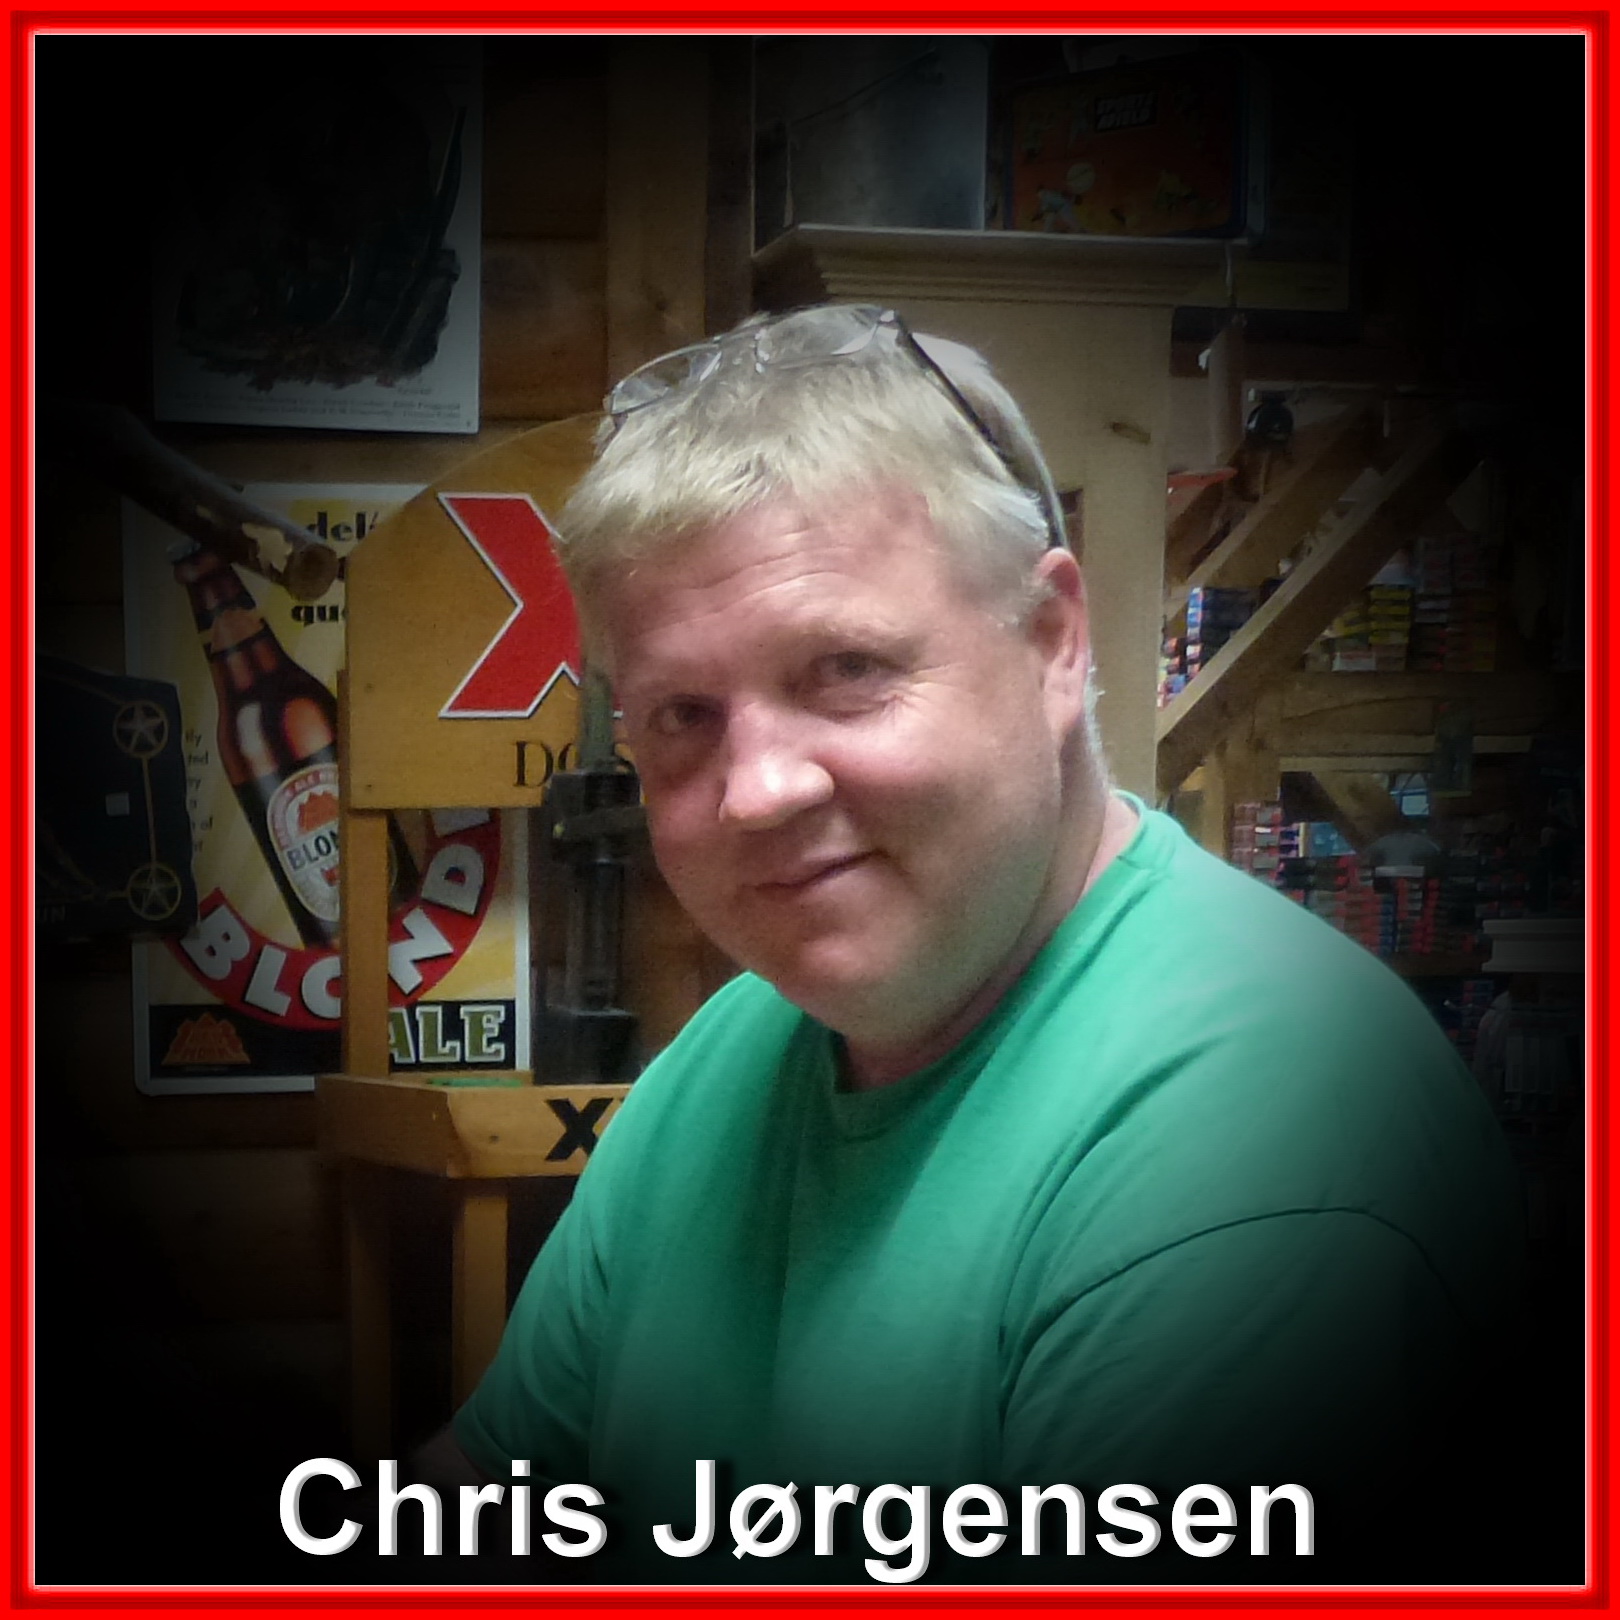 Chris Jørgensen